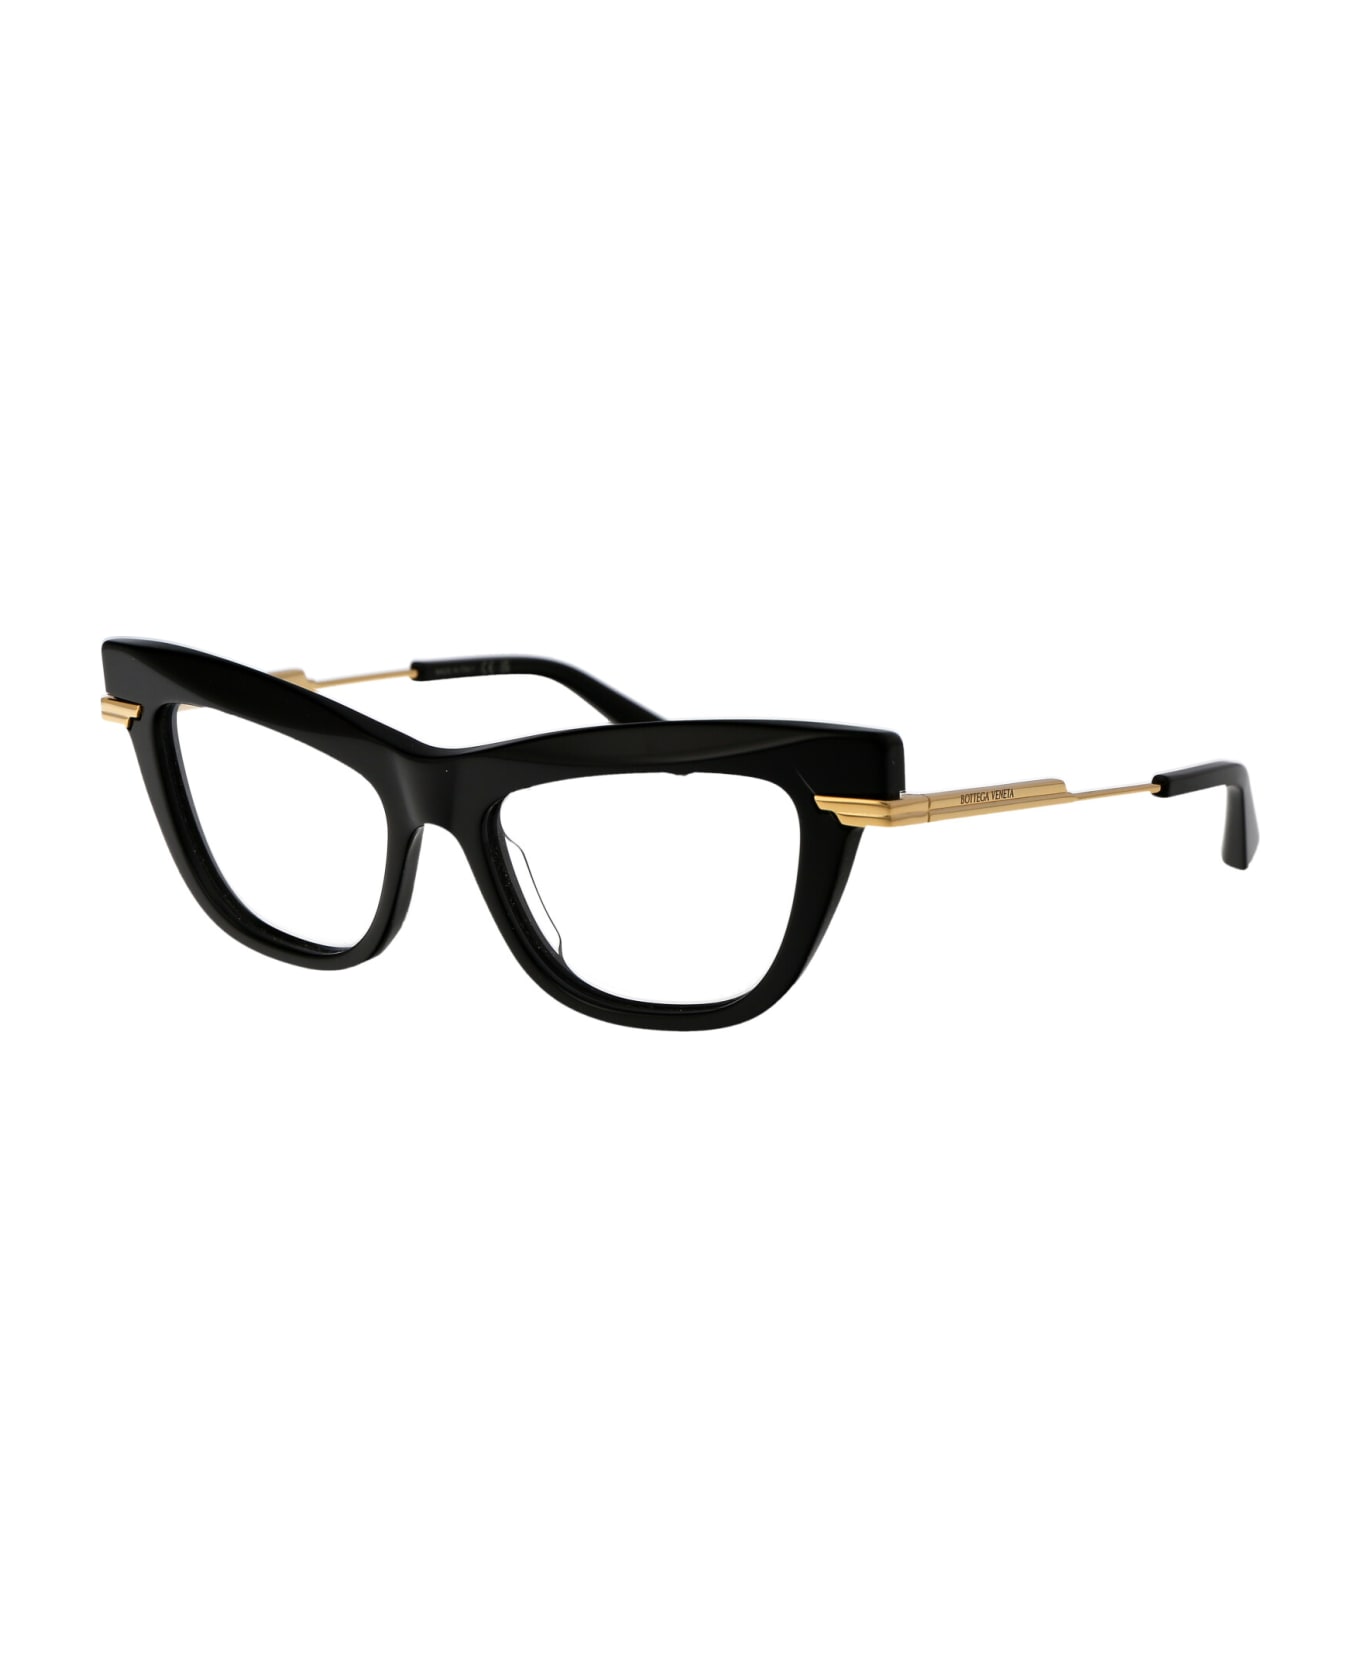 Bottega Veneta Eyewear Bv1266o Glasses - 001 BLACK GOLD TRANSPARENT アイウェア